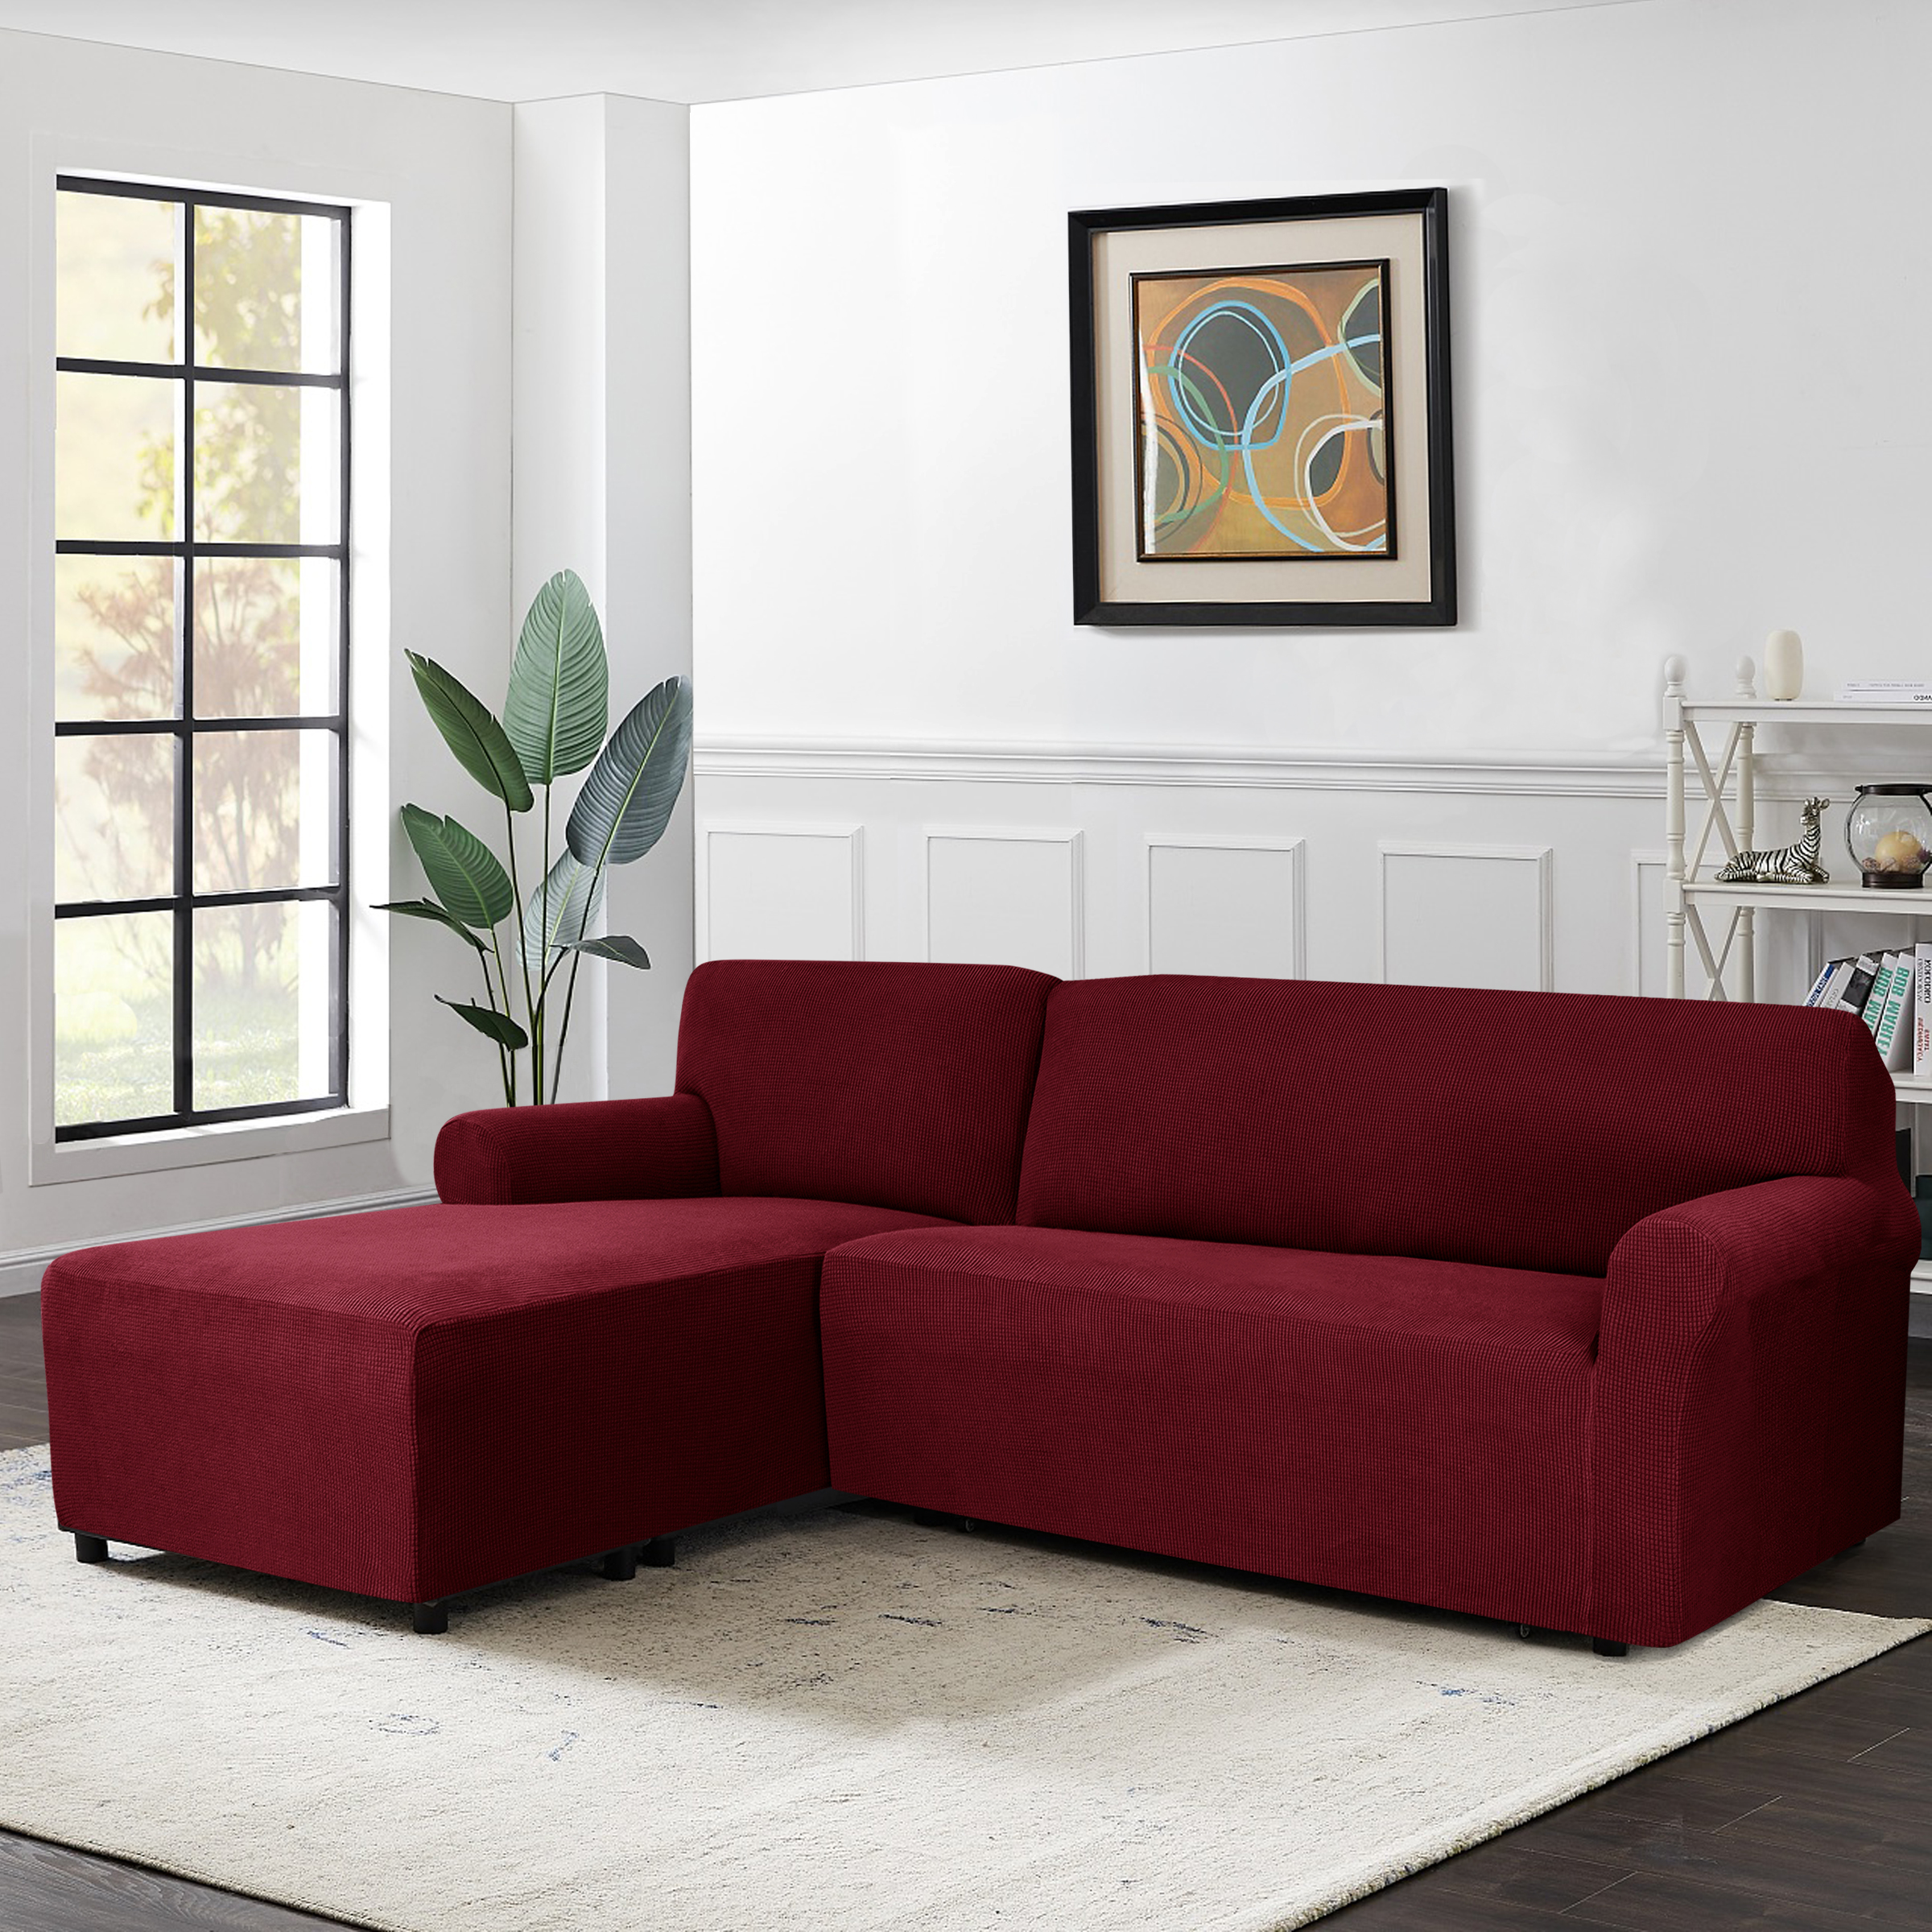 L-shaped Elastic Sofa Cover Sets Comfortable Corner Sofa Slipcover Protector 